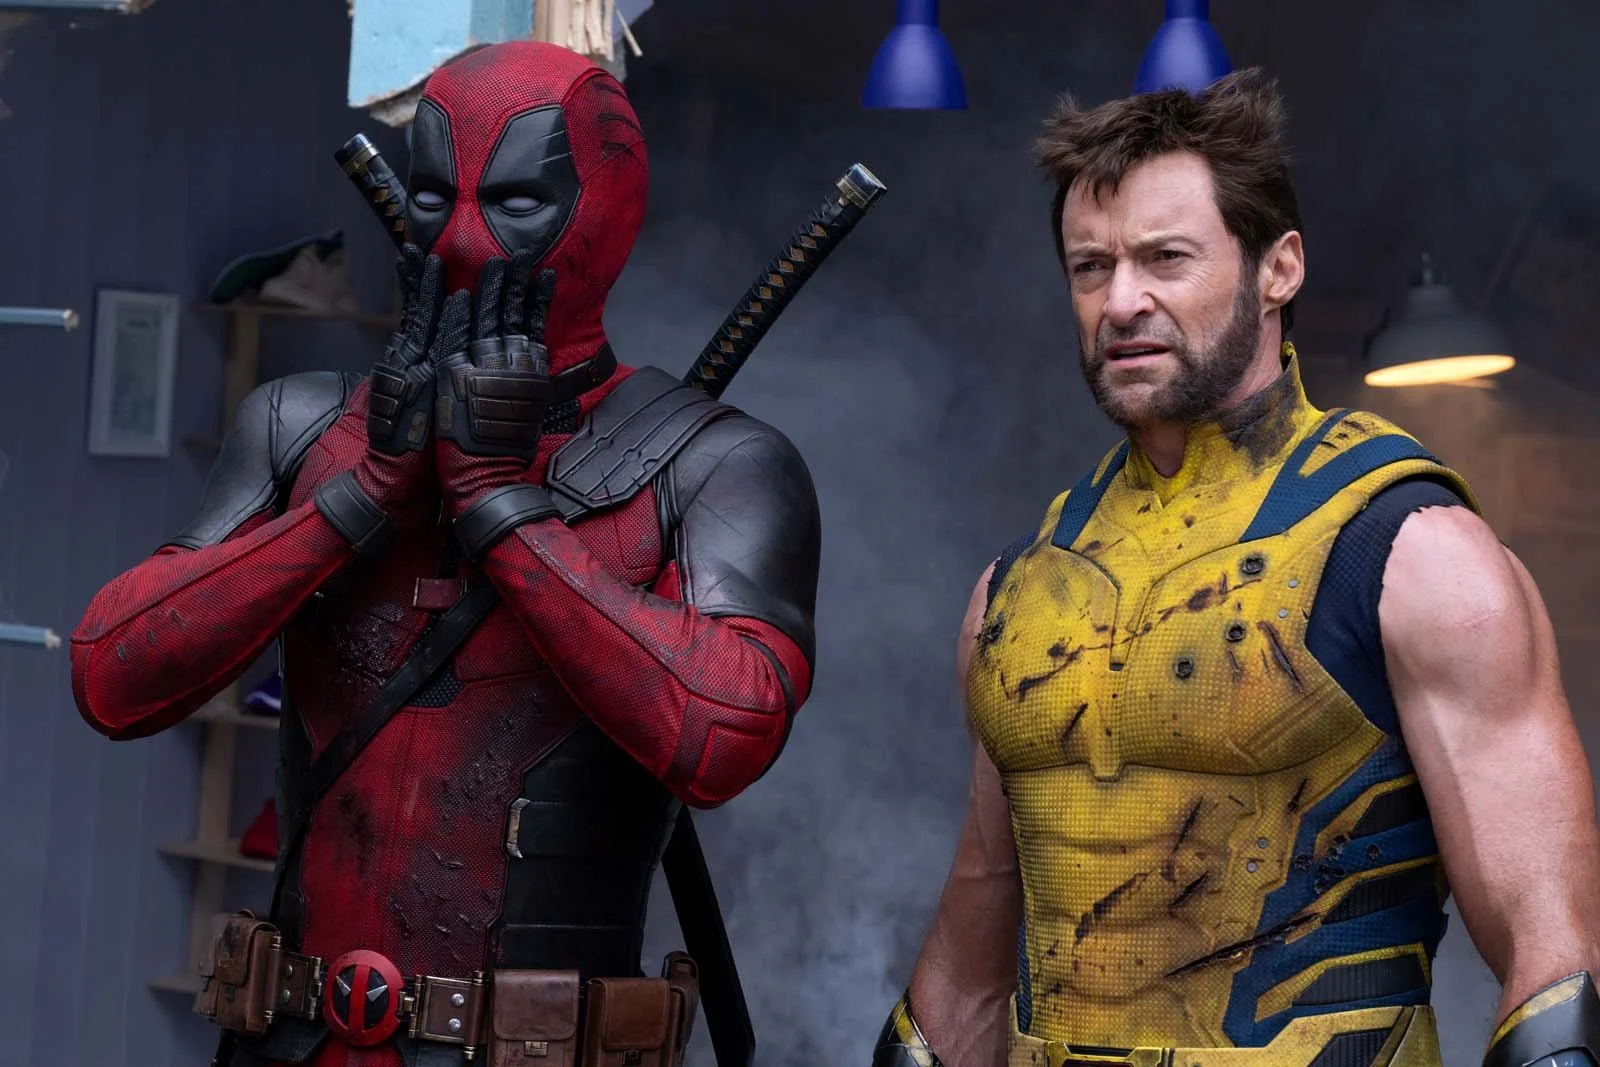 Review Film Deadpool & Wolverine: Kolaborasi Kocak Dua Jagoan Marvel